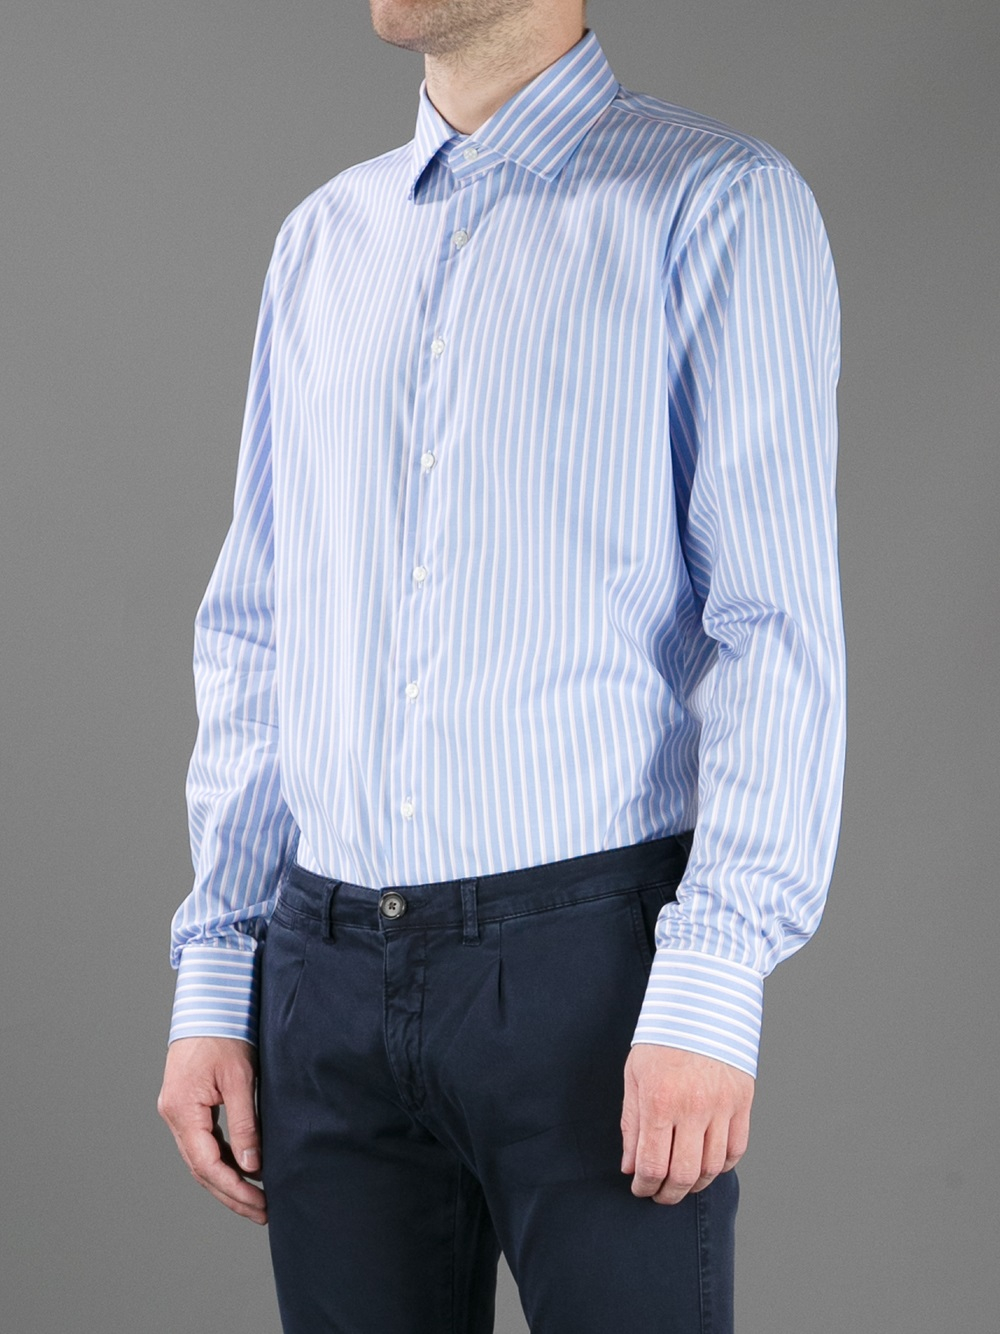 Hackett Pastel Striped Shirt in Blue for Men - Lyst